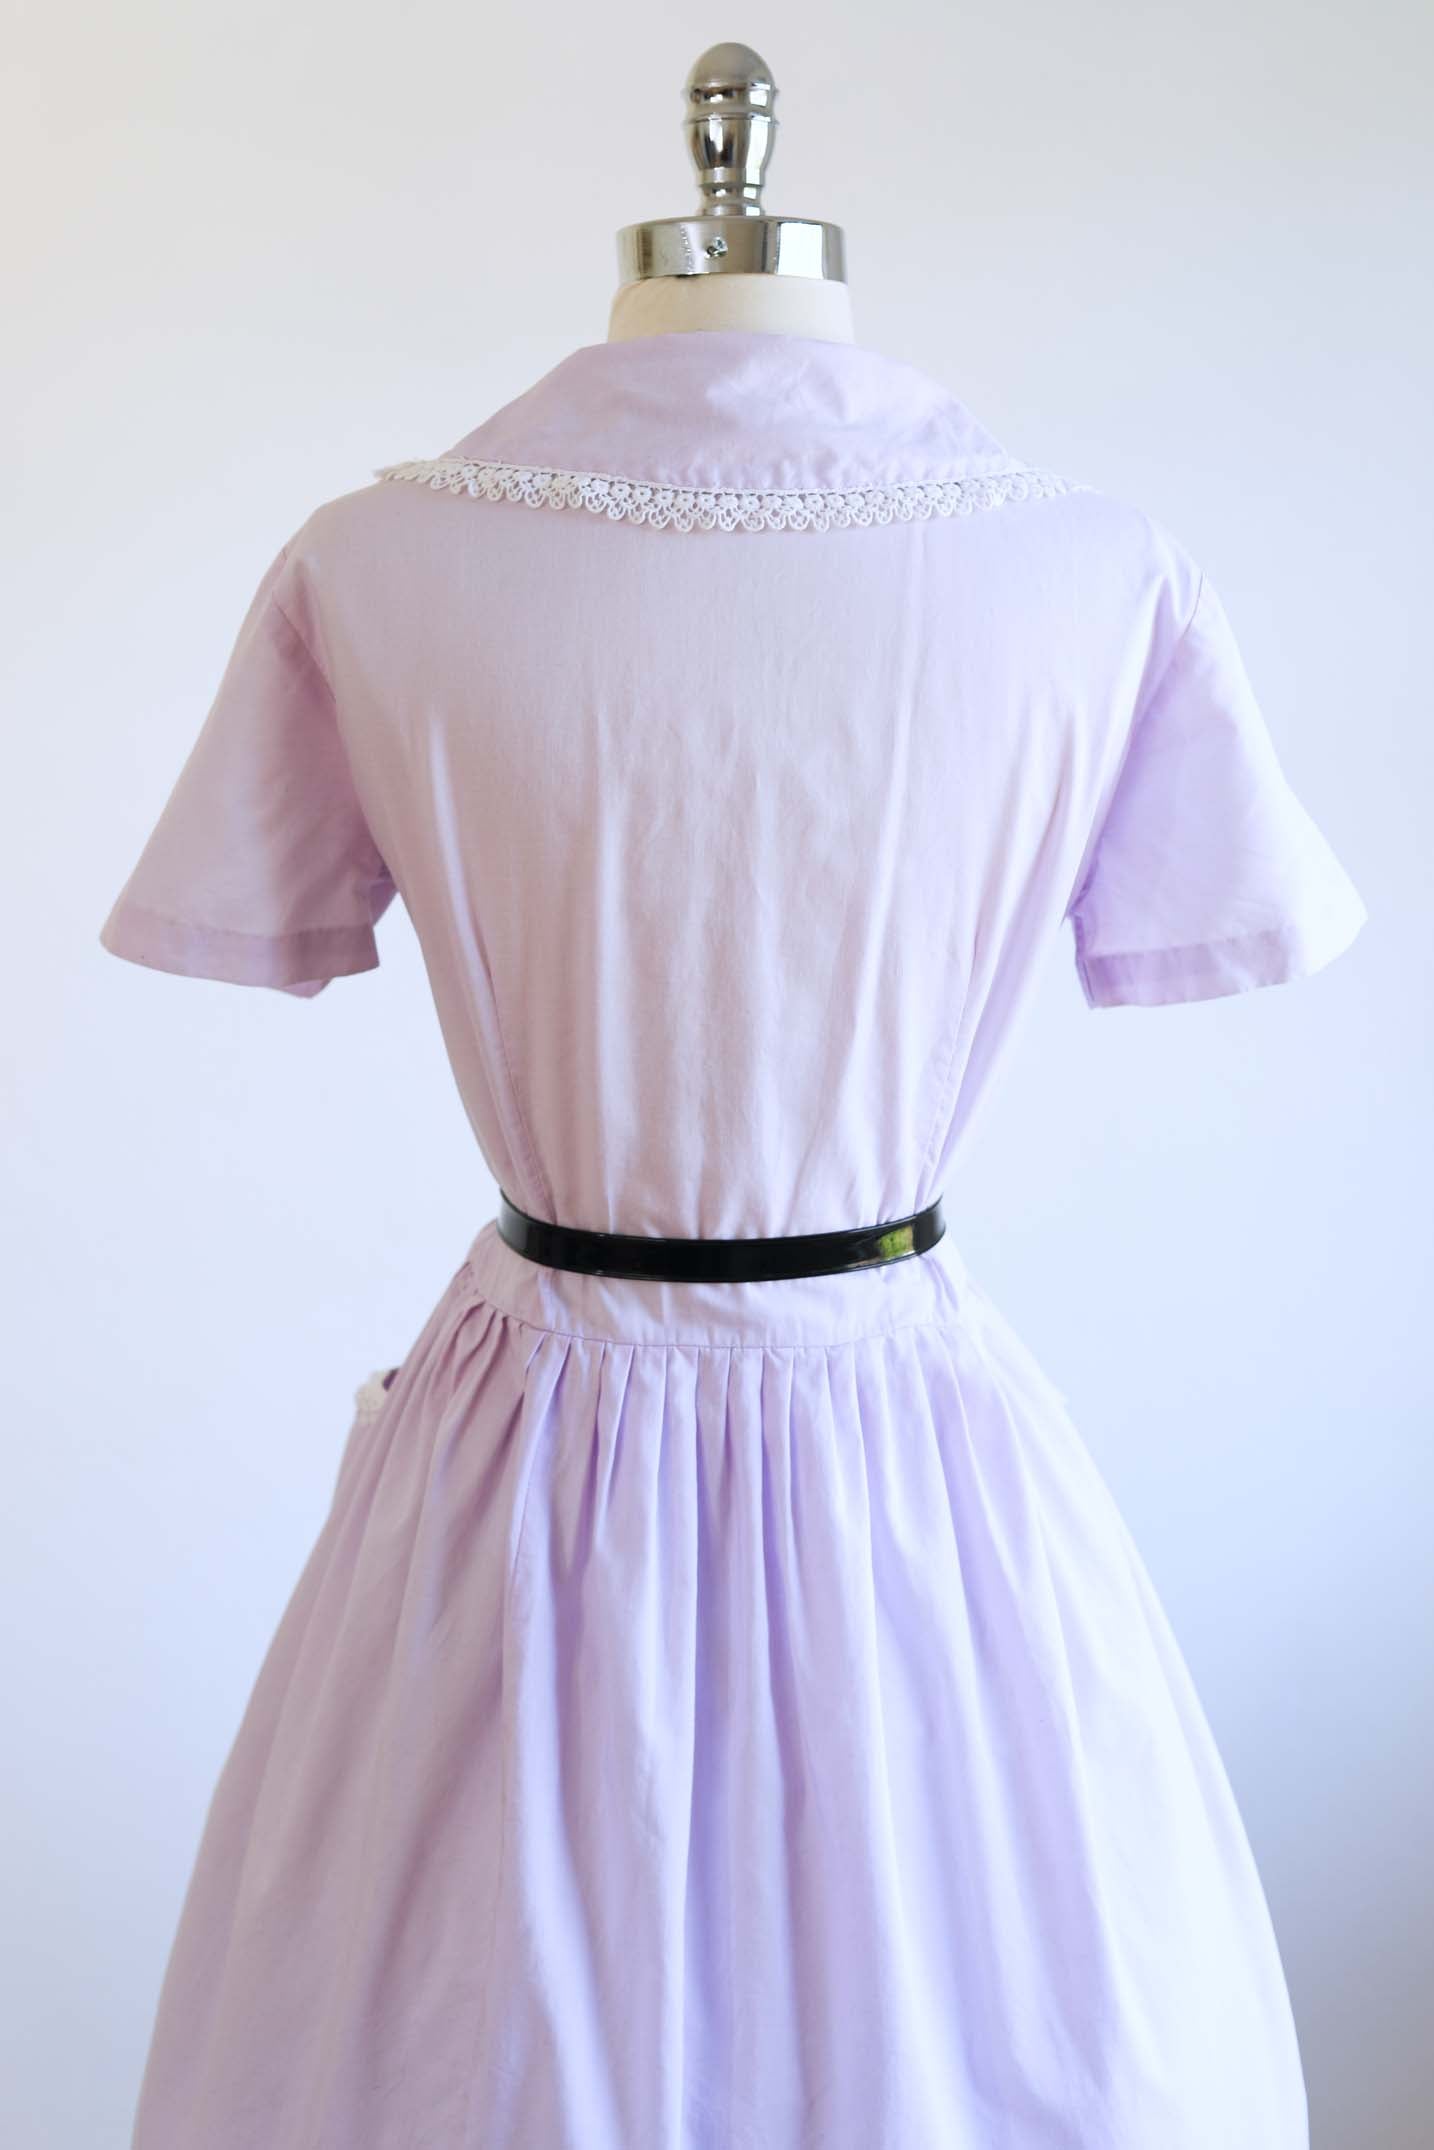 Vintage 1950s Dress - Darling Pastel Lavender Purple Cotton Shirtwaist w Big Lace-Trimmed Pockets Size L to XL